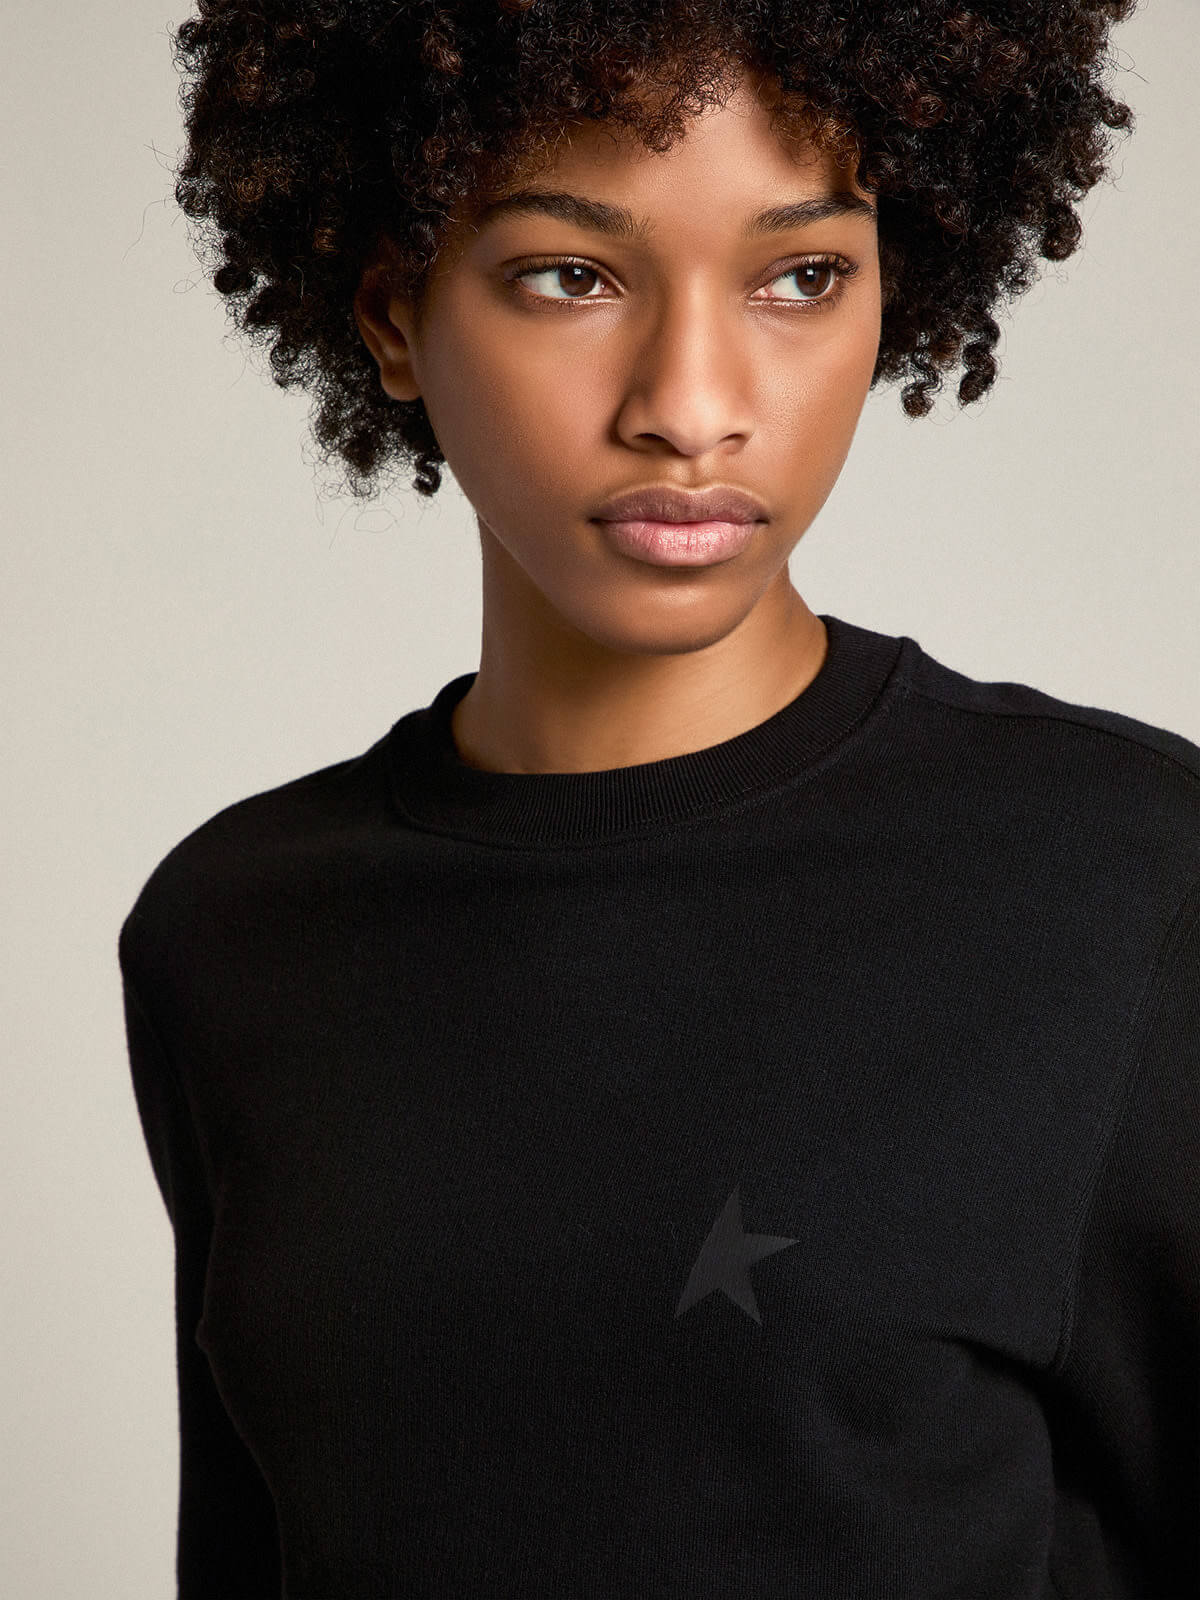 Golden Goose Star Athena Crewneck Sweatshirt in Black from The New Trend